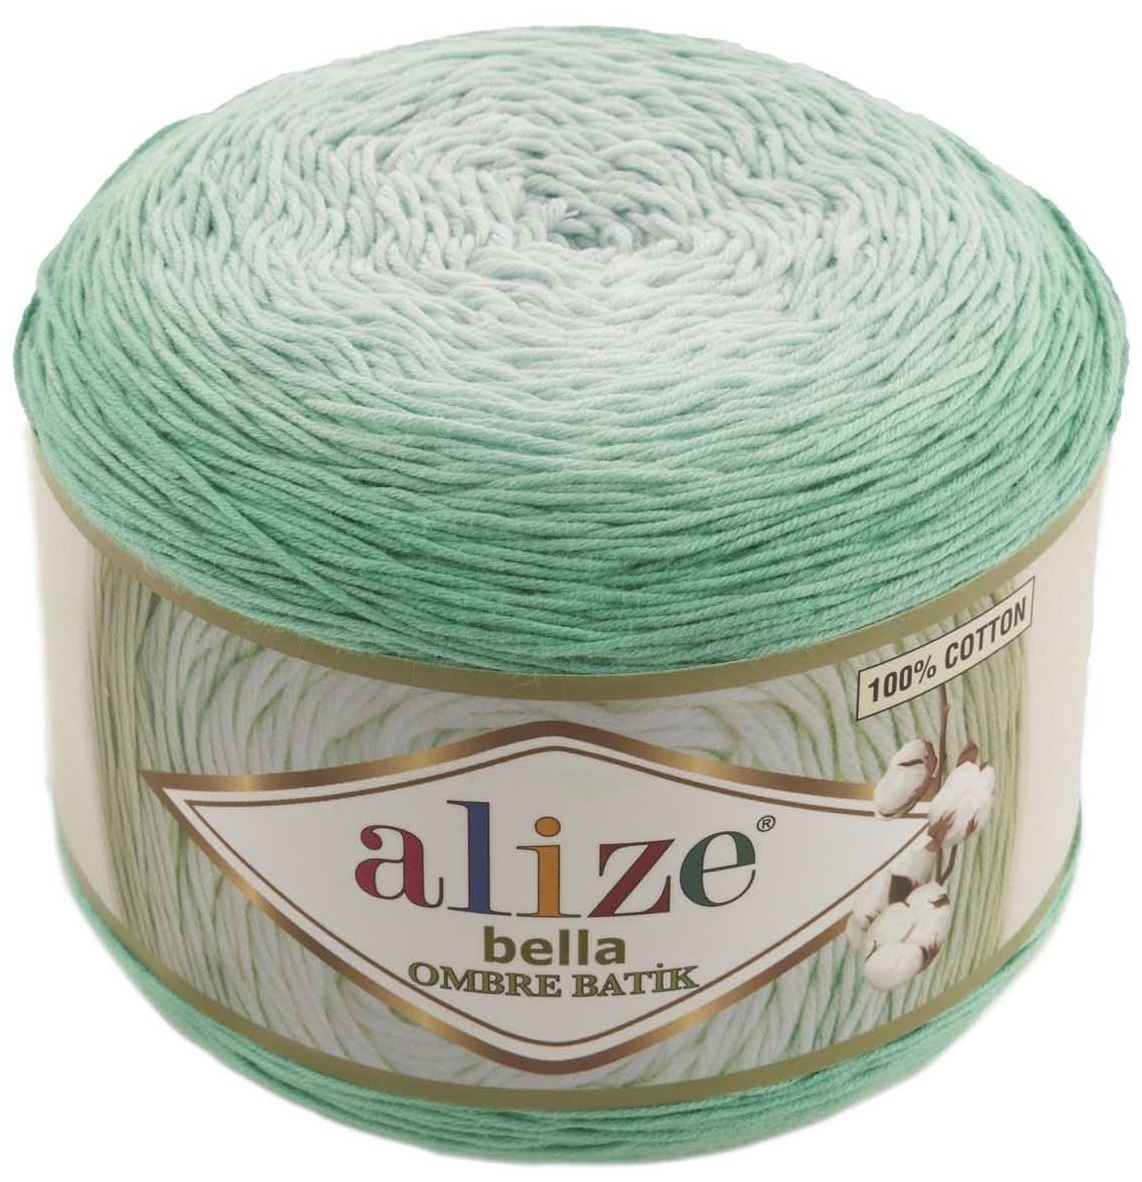 Alize Bella Ombre Batik 100% cotton, 2 Skein Value Pack, 500g фото 7